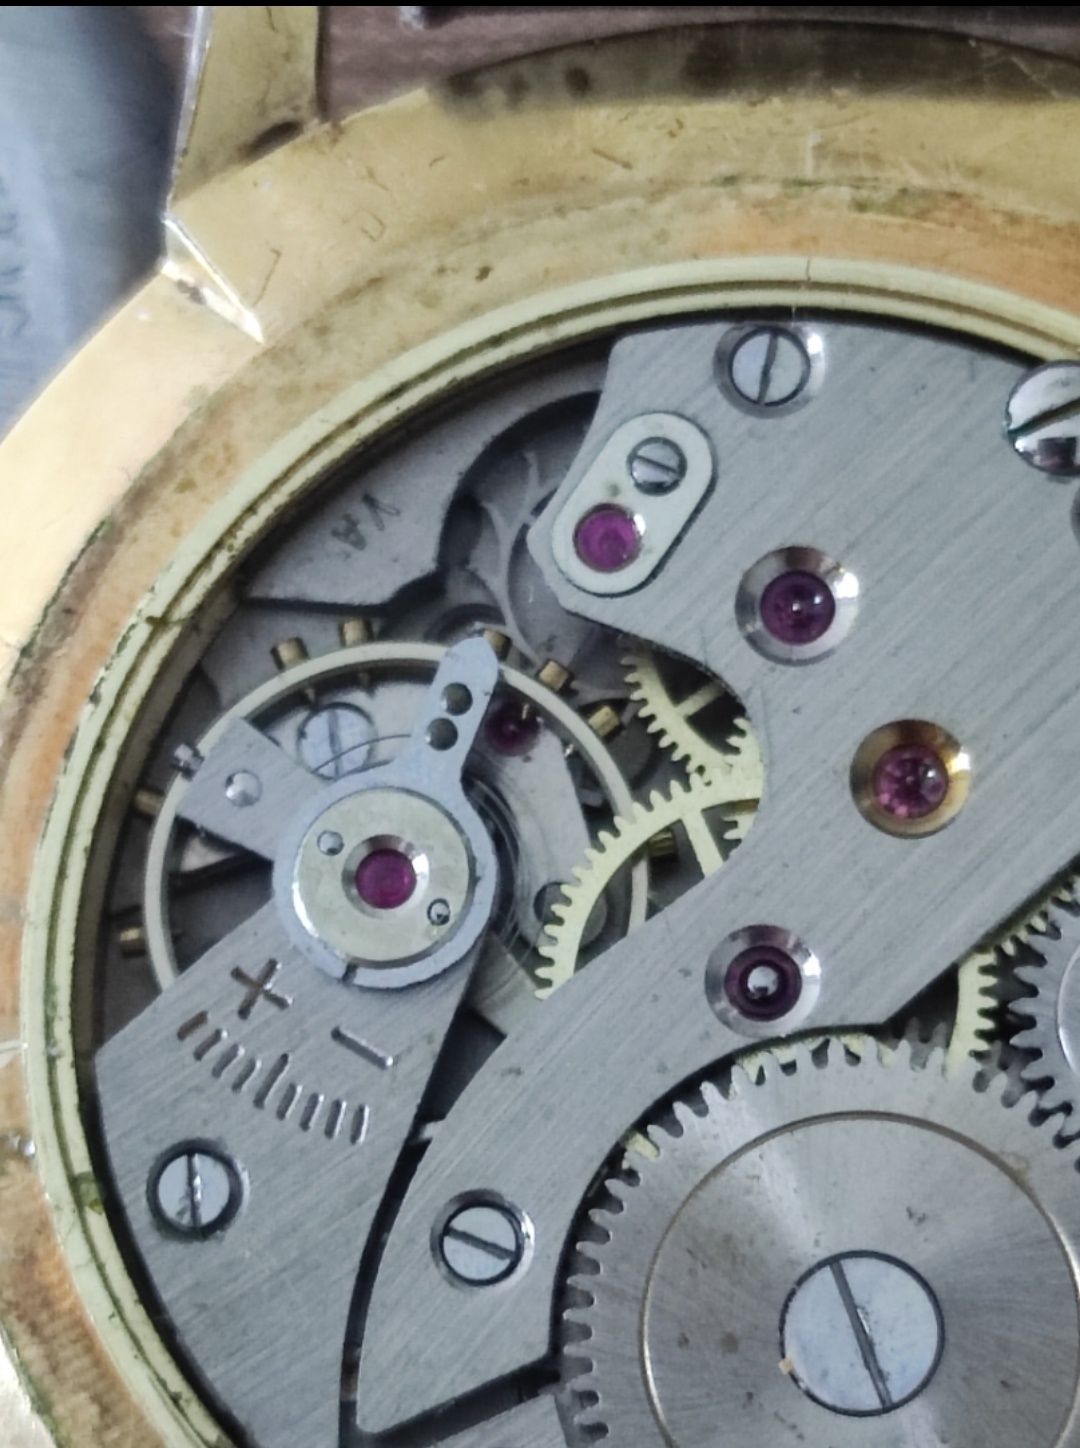 Vintage zegarek męski ALLAINE Swiss made